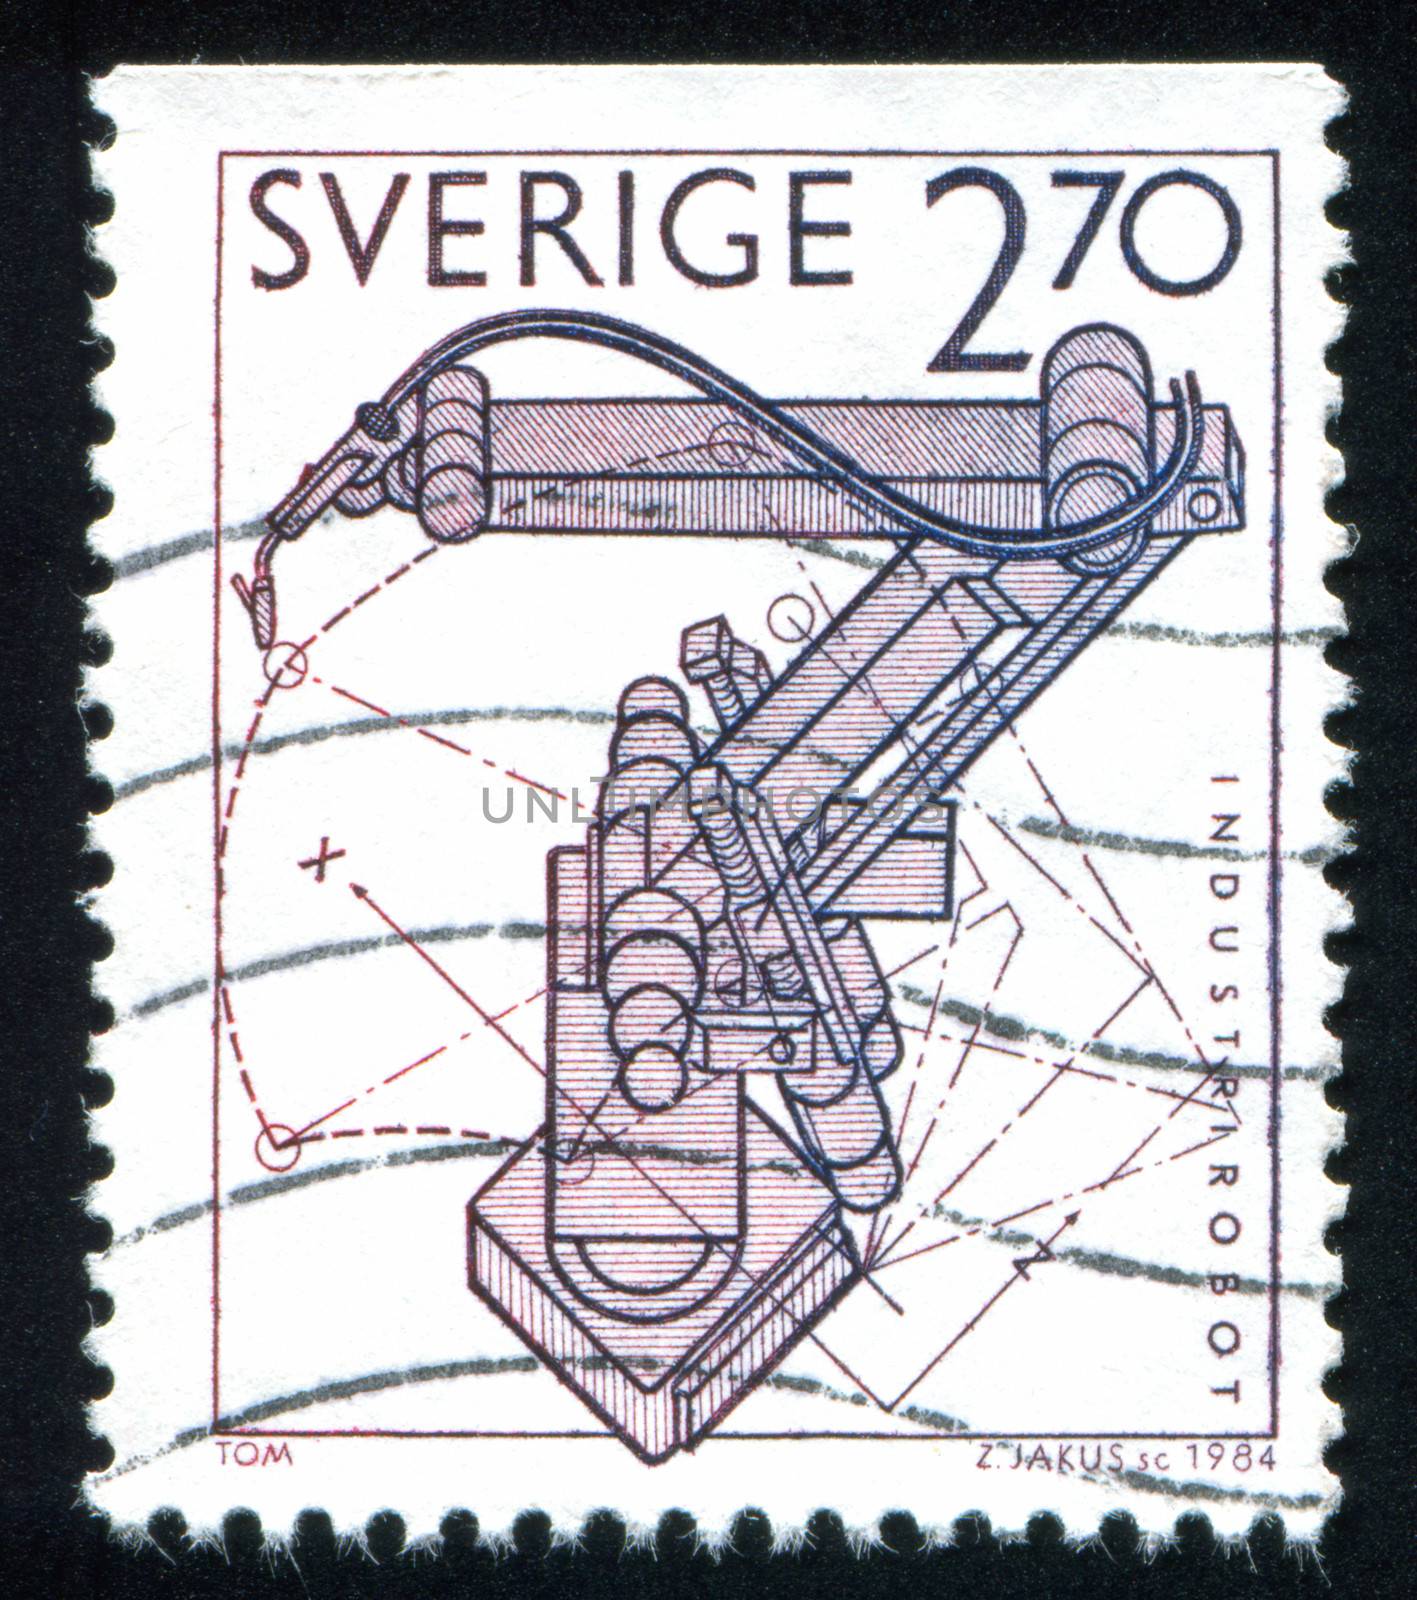 SWEDEN - CIRCA 1984: stamp printed by Sweden, shows Industrial robot, circa 1984